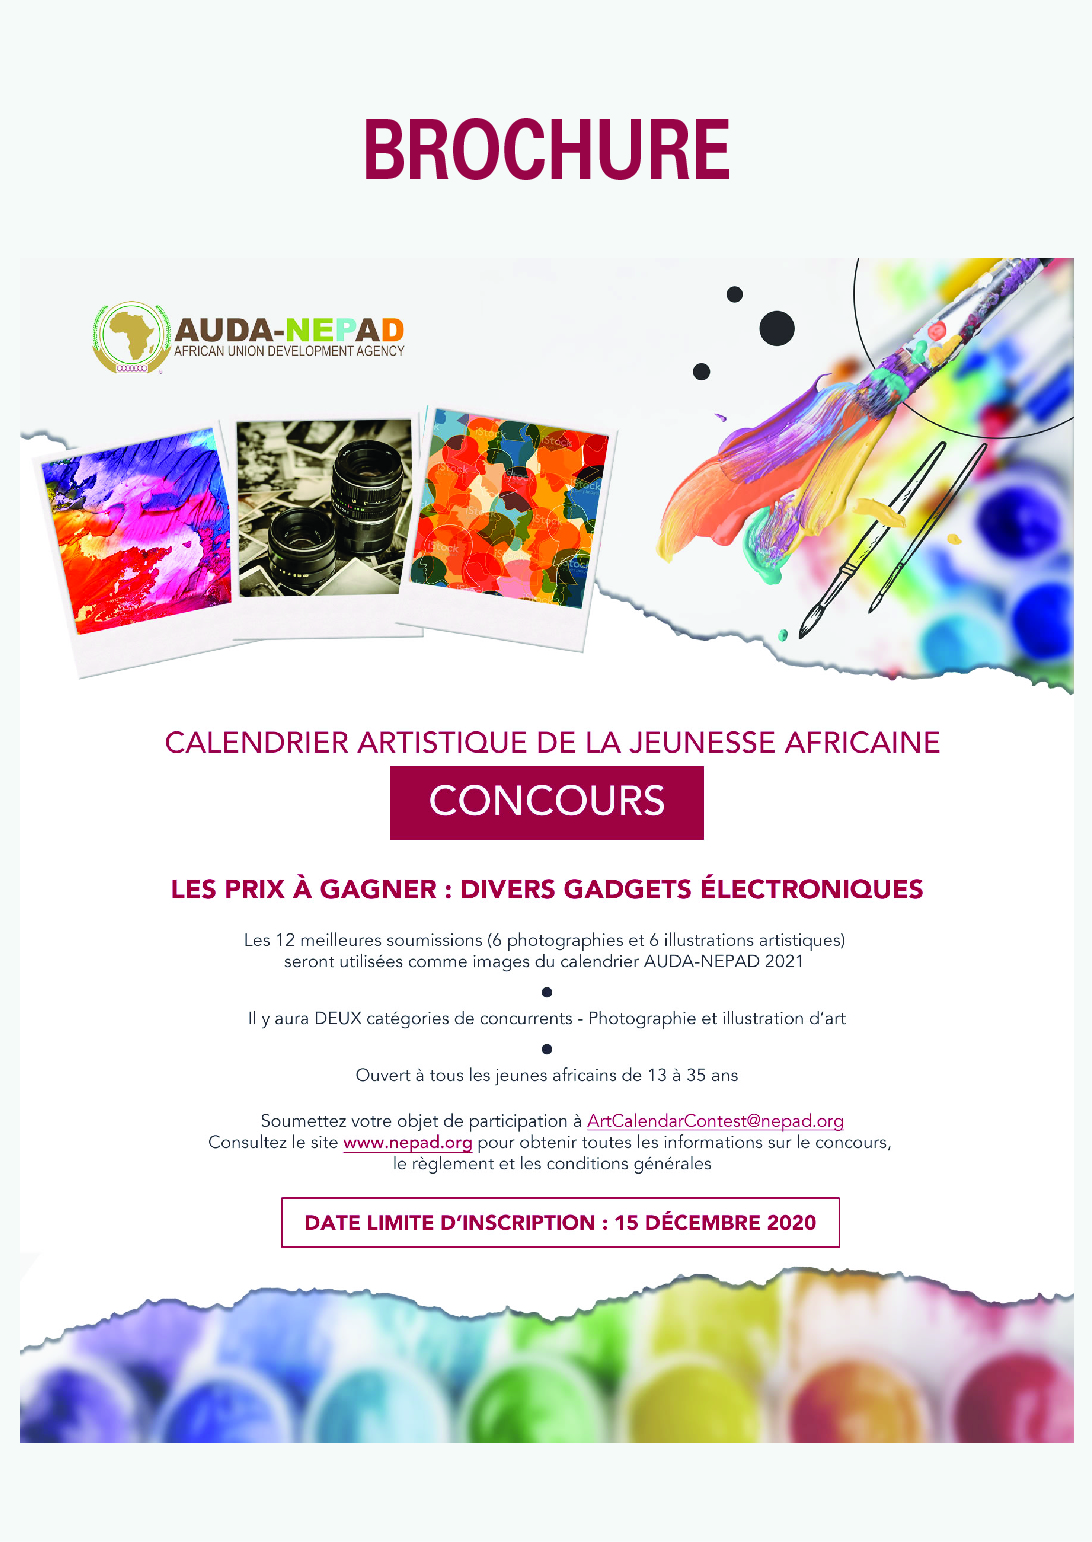 Brochure: AUDA-NEPAD African Youth Art Calendar Contest: French